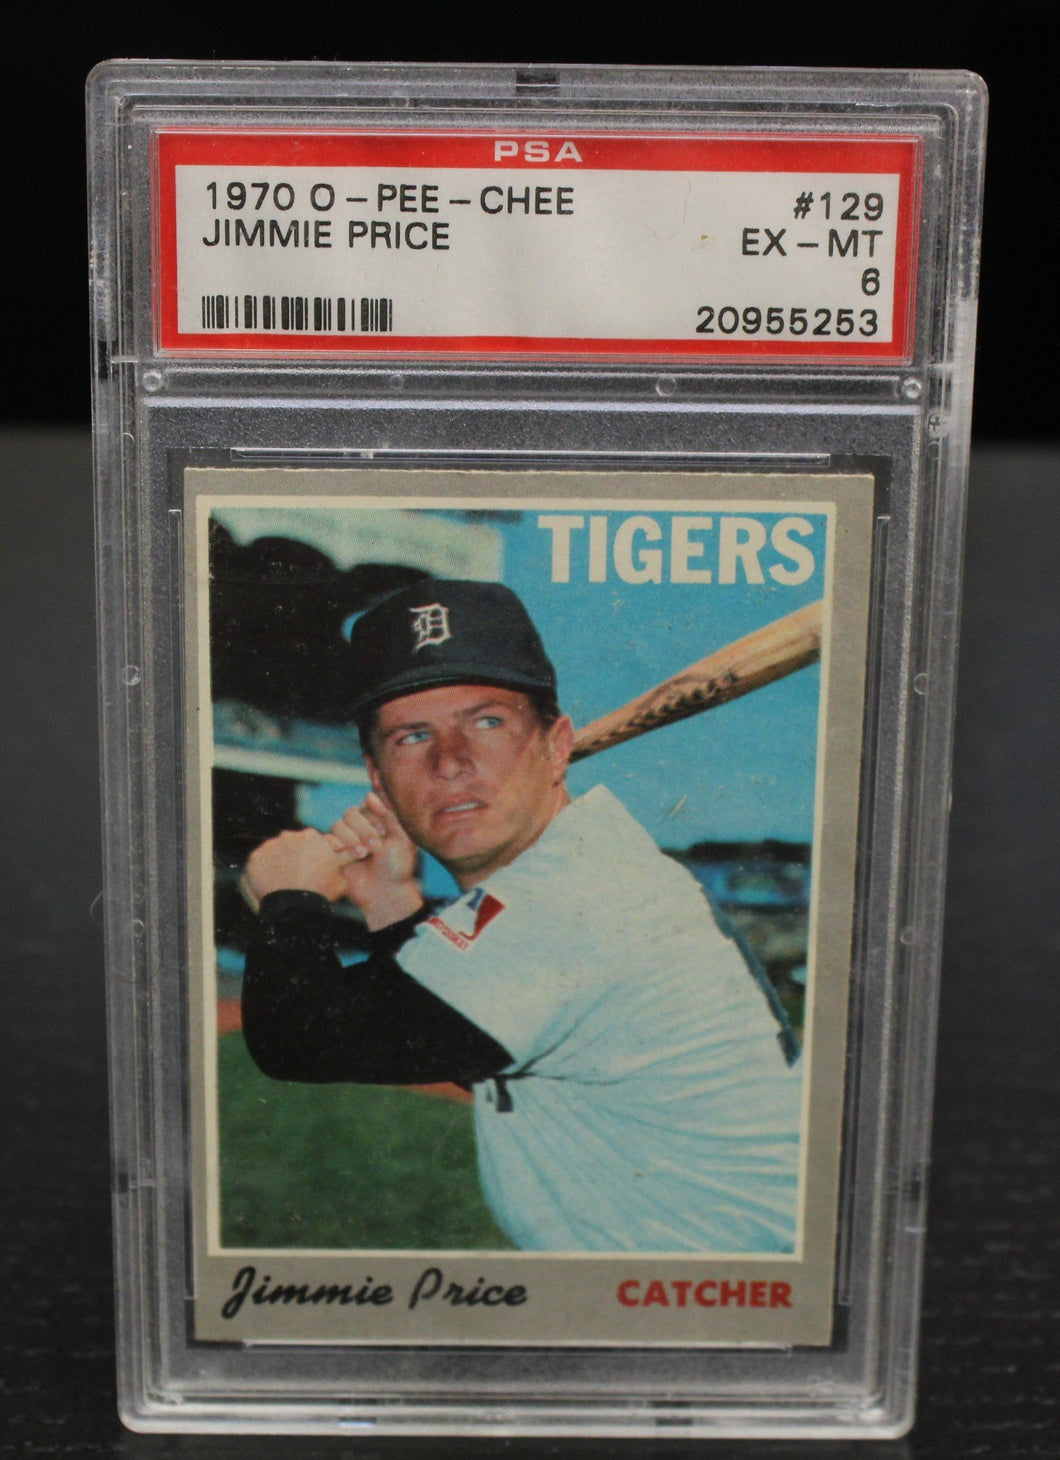 1970 OPC Jimmie Price #129 PSA Graded EX-MT 6 Baseball Card